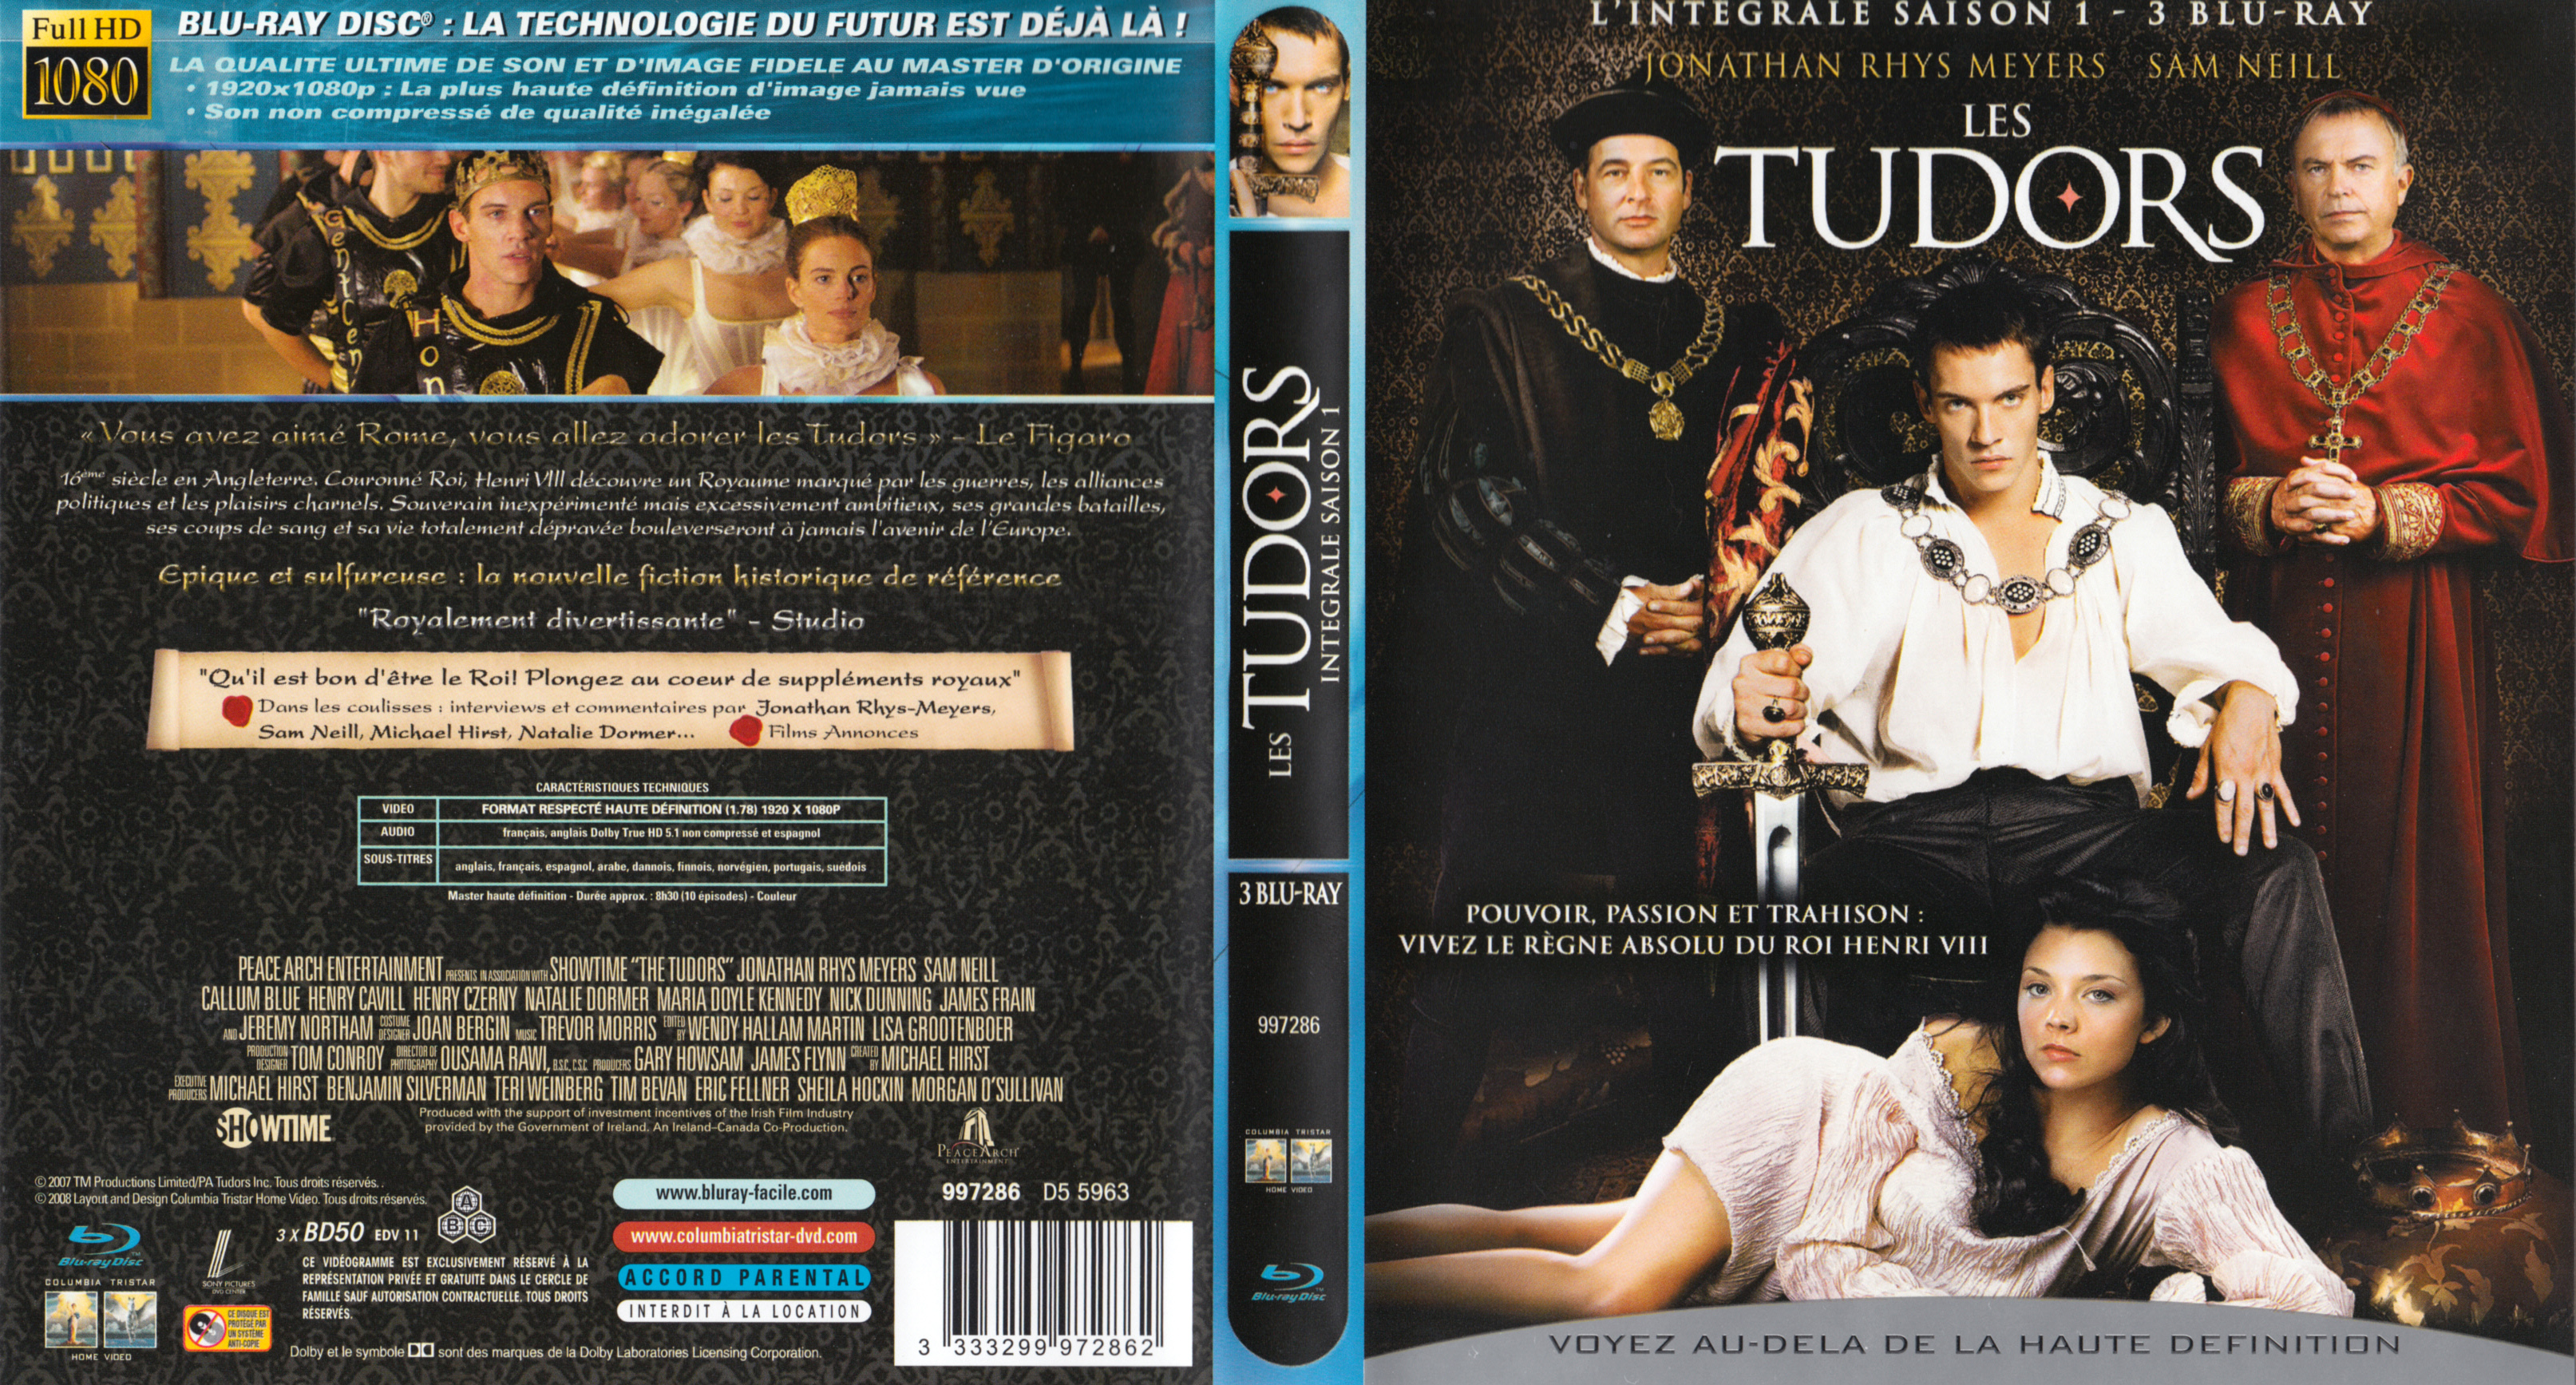 Jaquette DVD Les Tudors saison 1 (BLU-RAY)